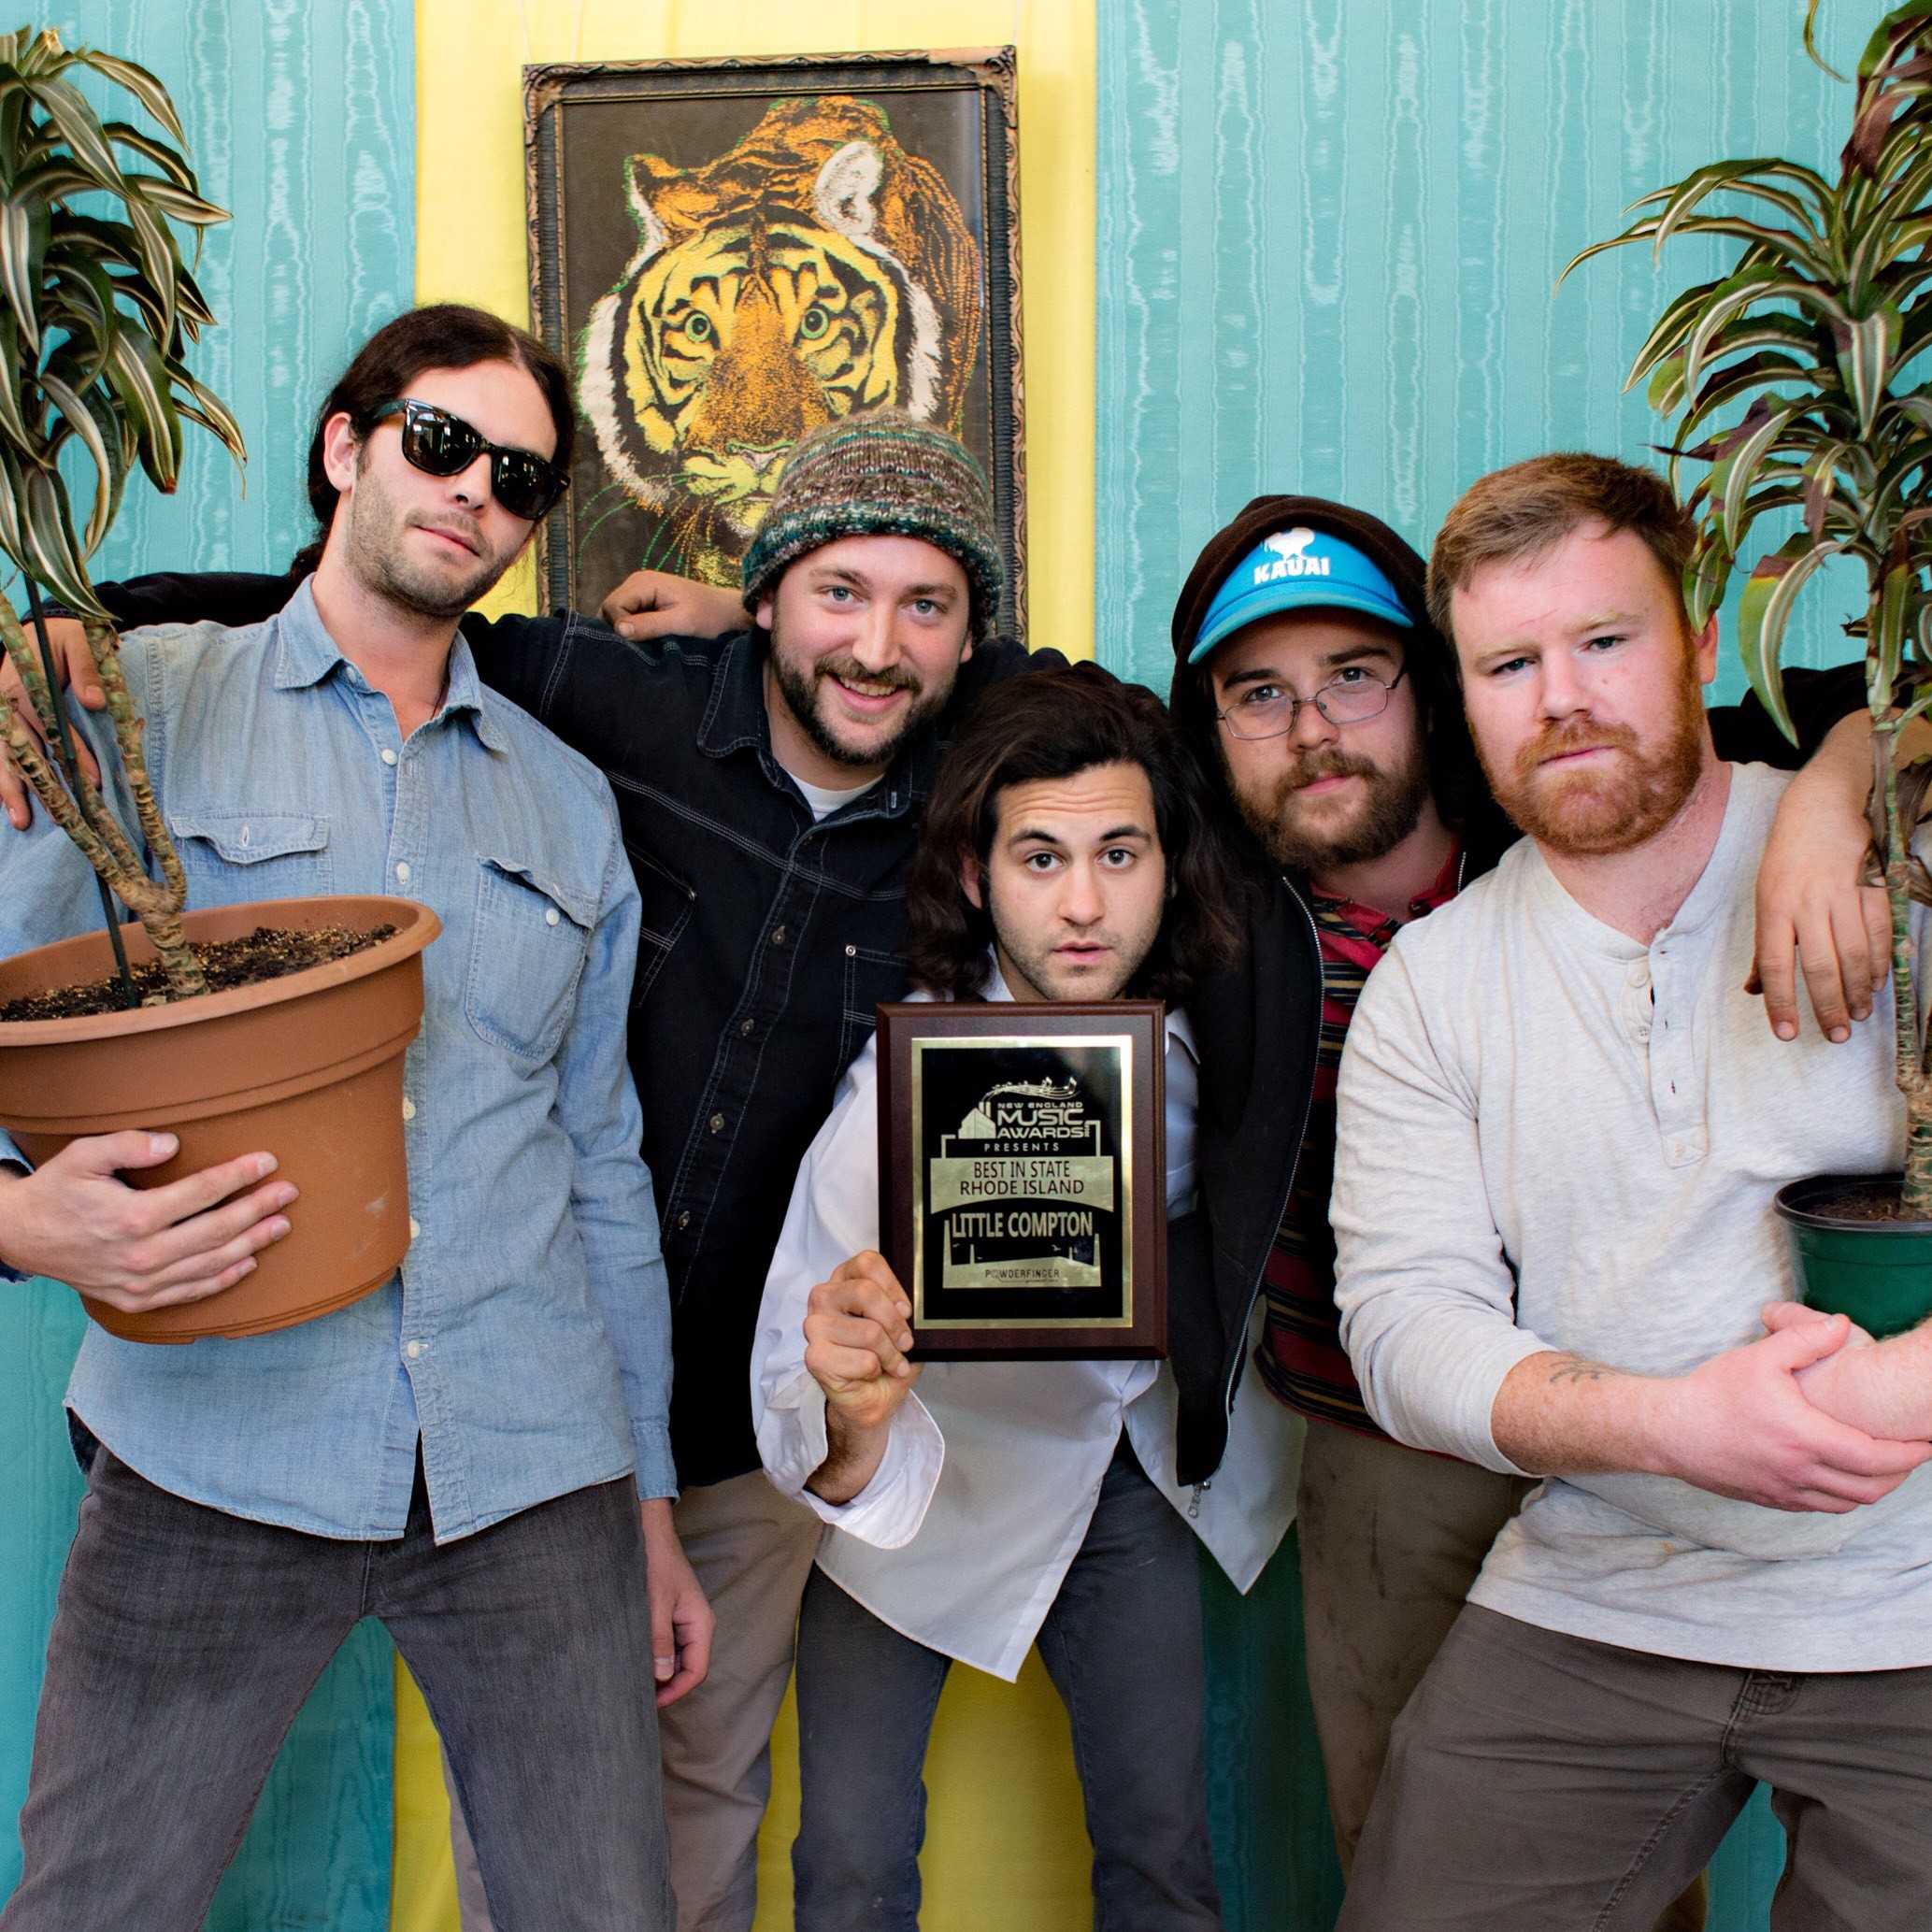 New England Music Awards salutes Little Compton Band